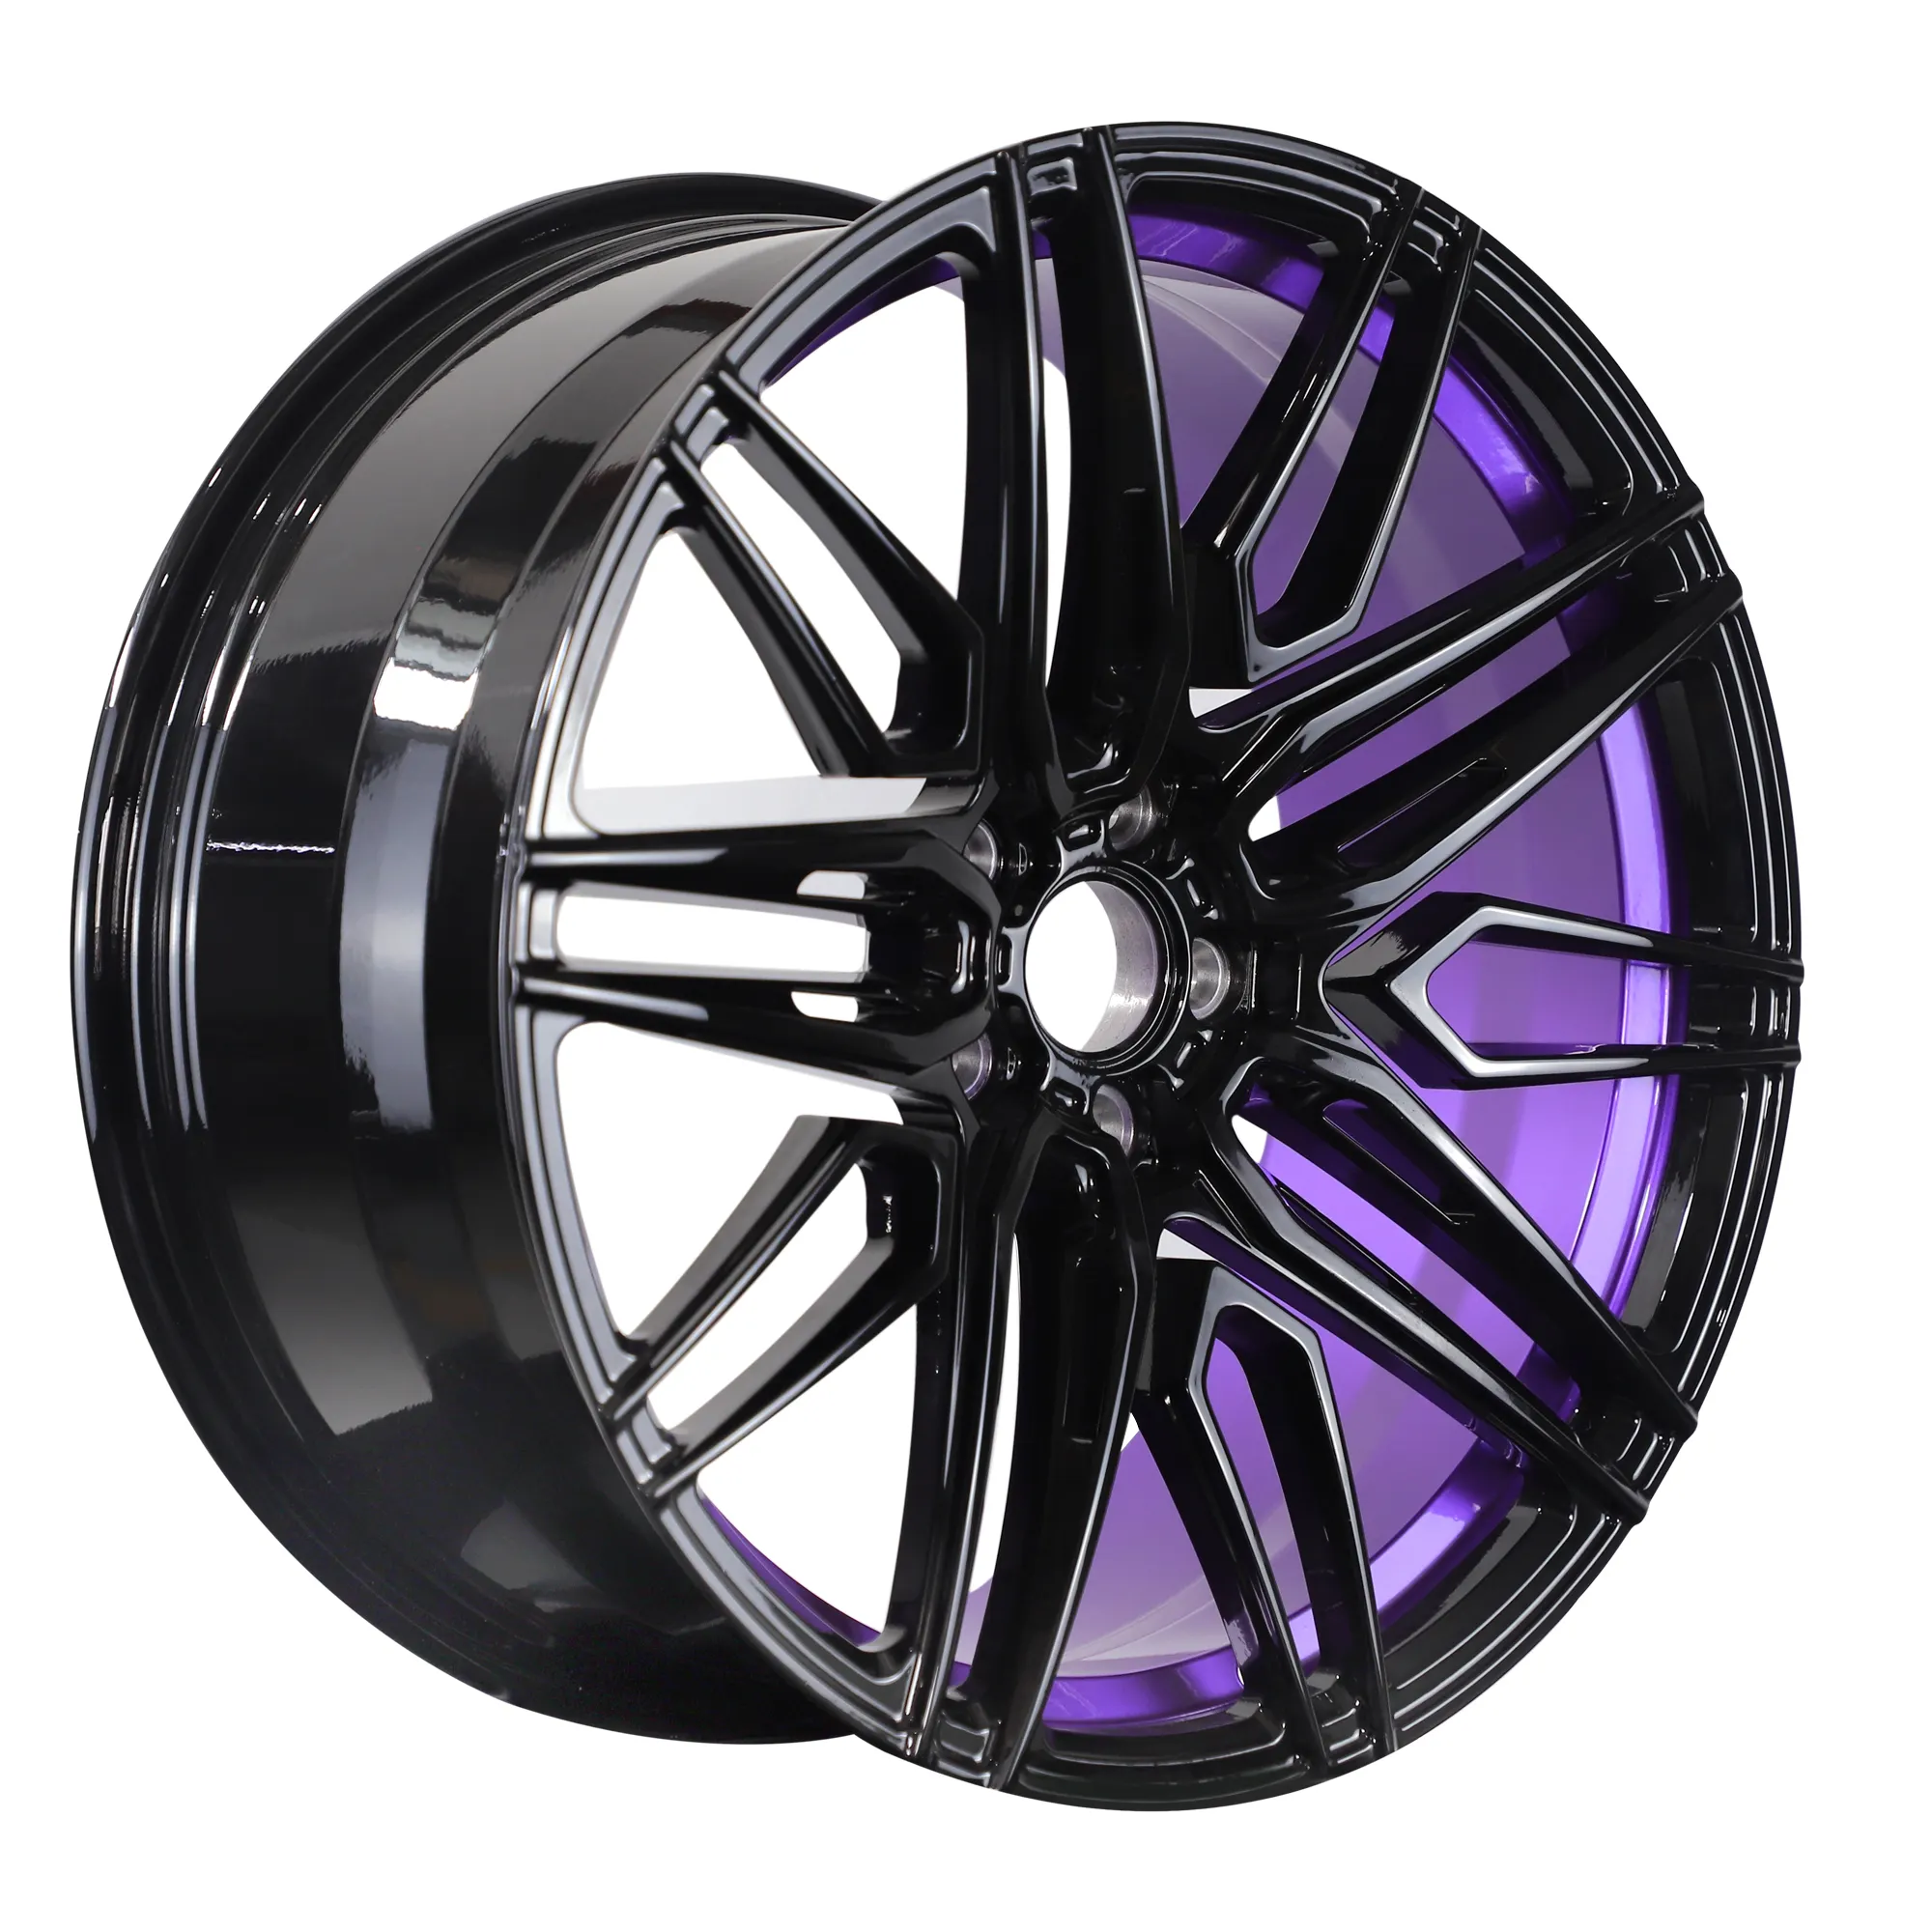 Pink black 19 inch forged alloy wheels rim for modification car alloy wheel rim